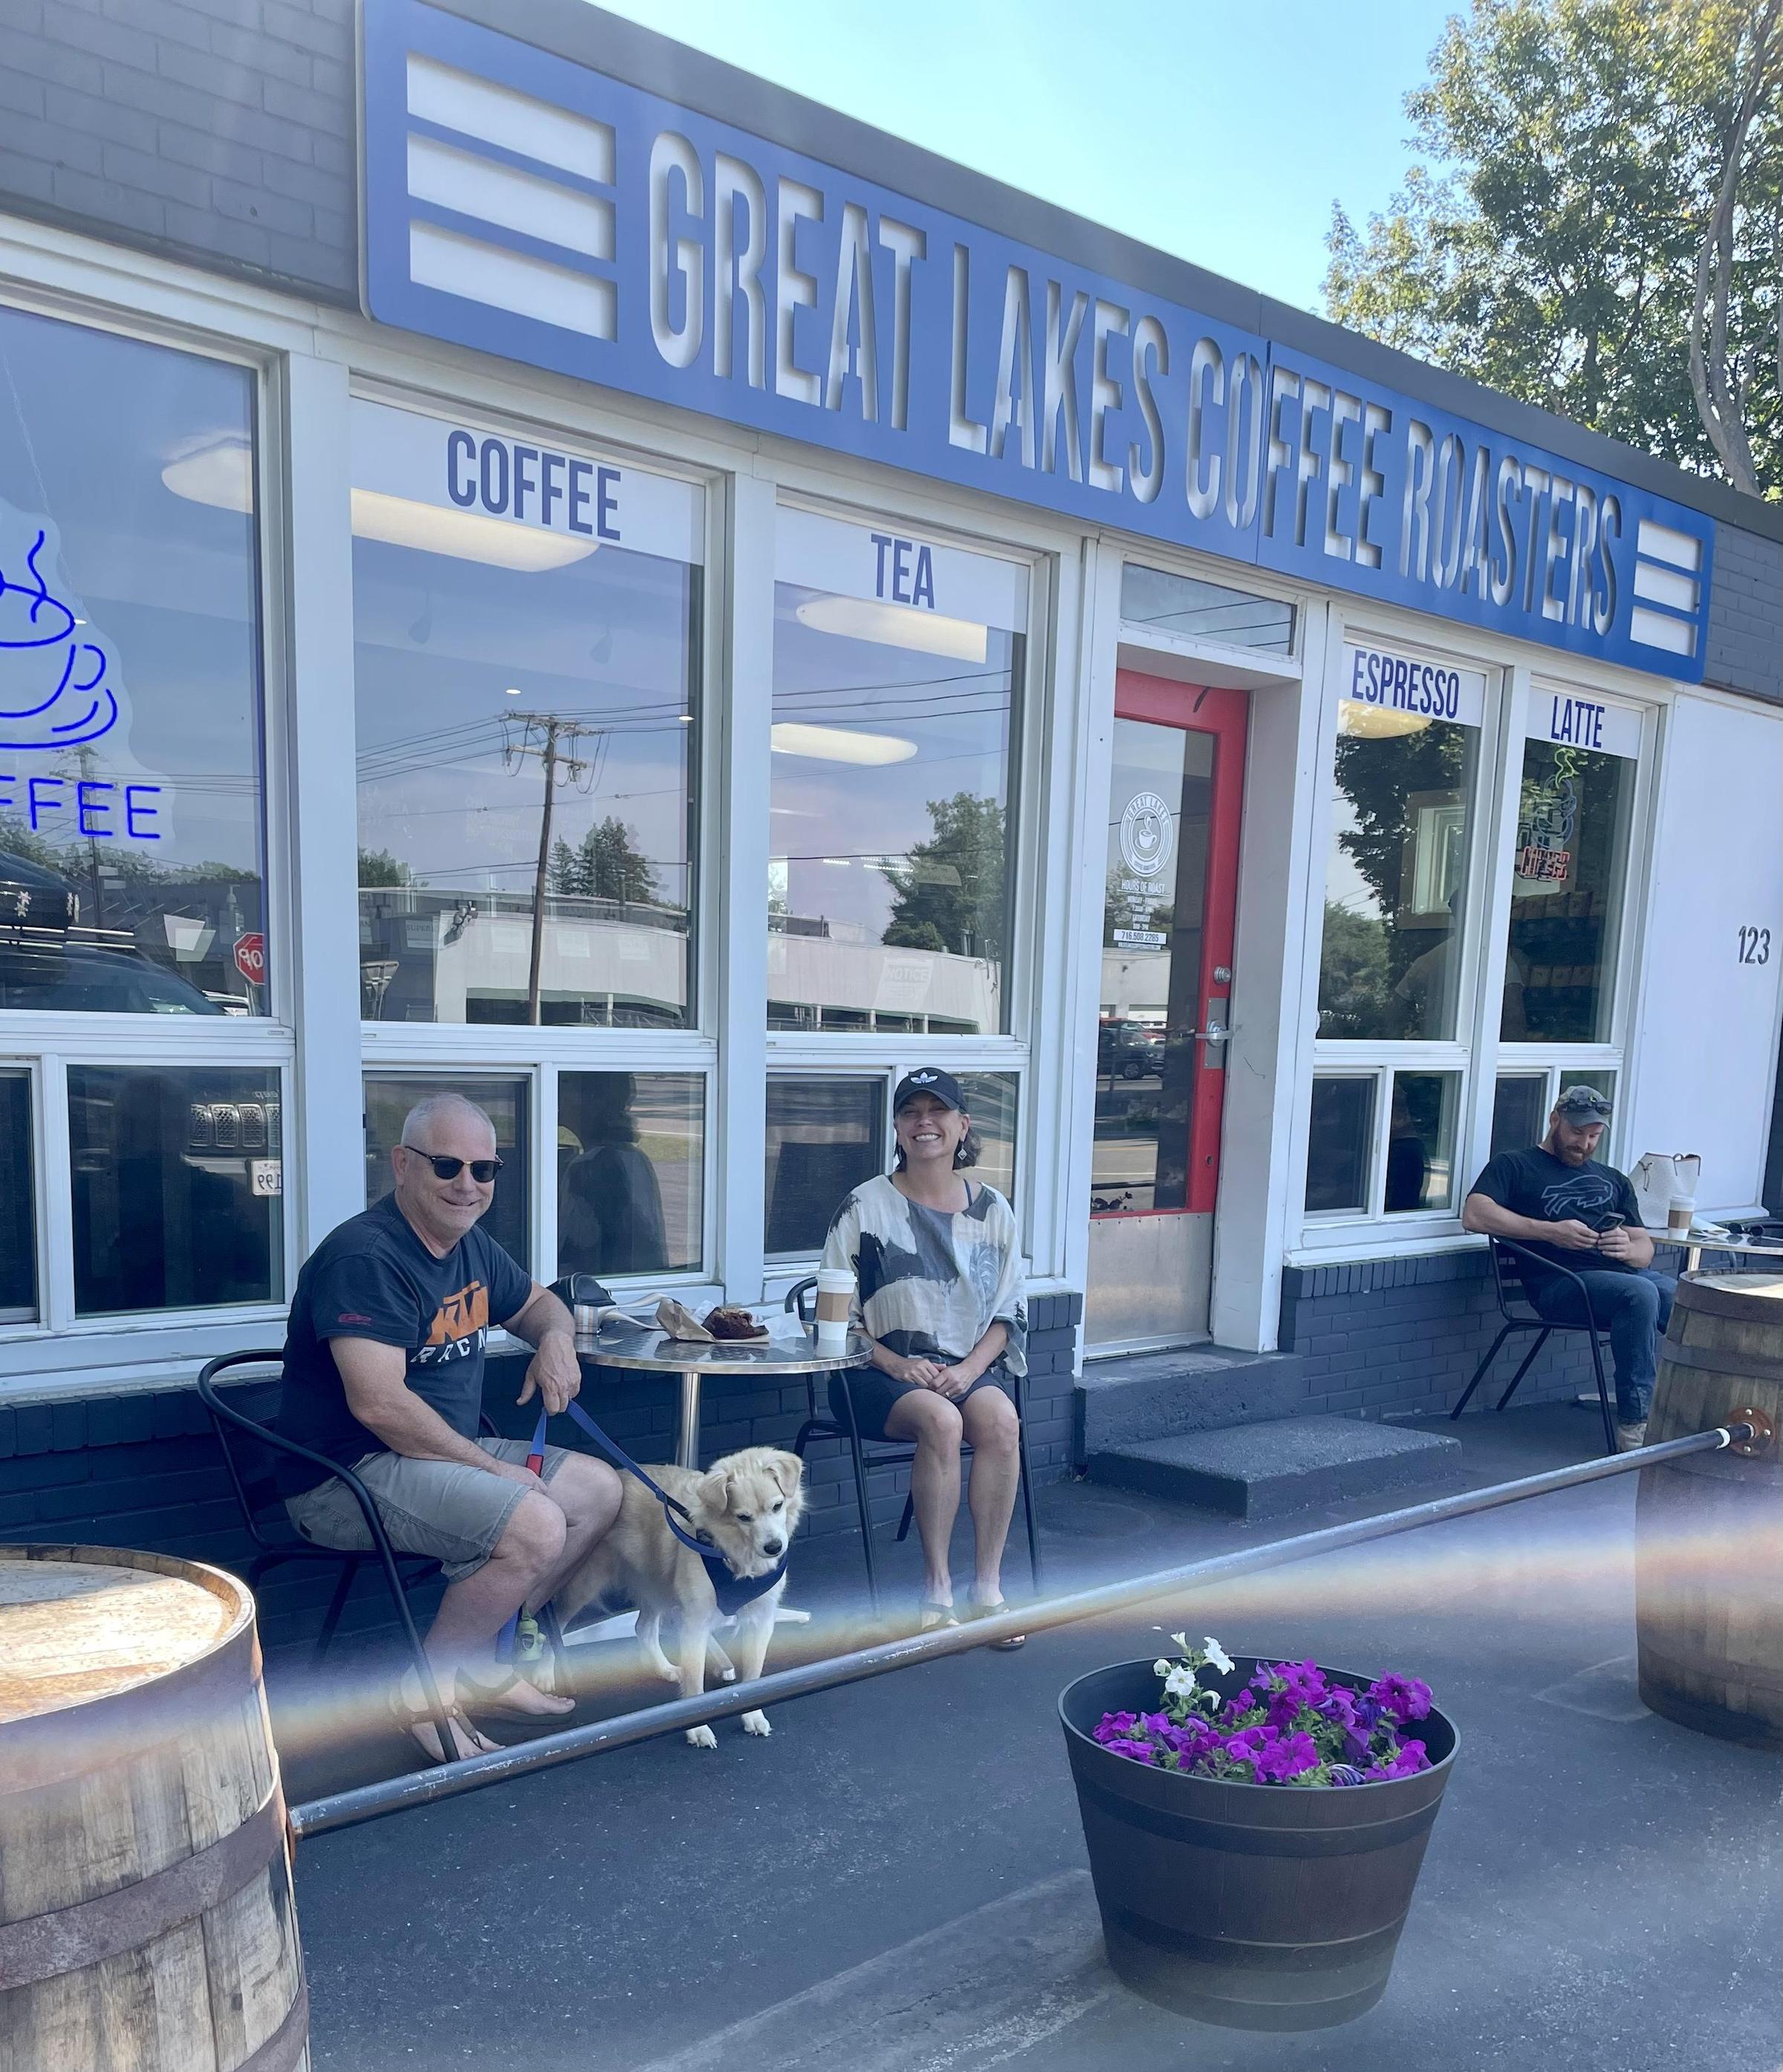 Pet Friendly Great Lakes Coffee Roasters